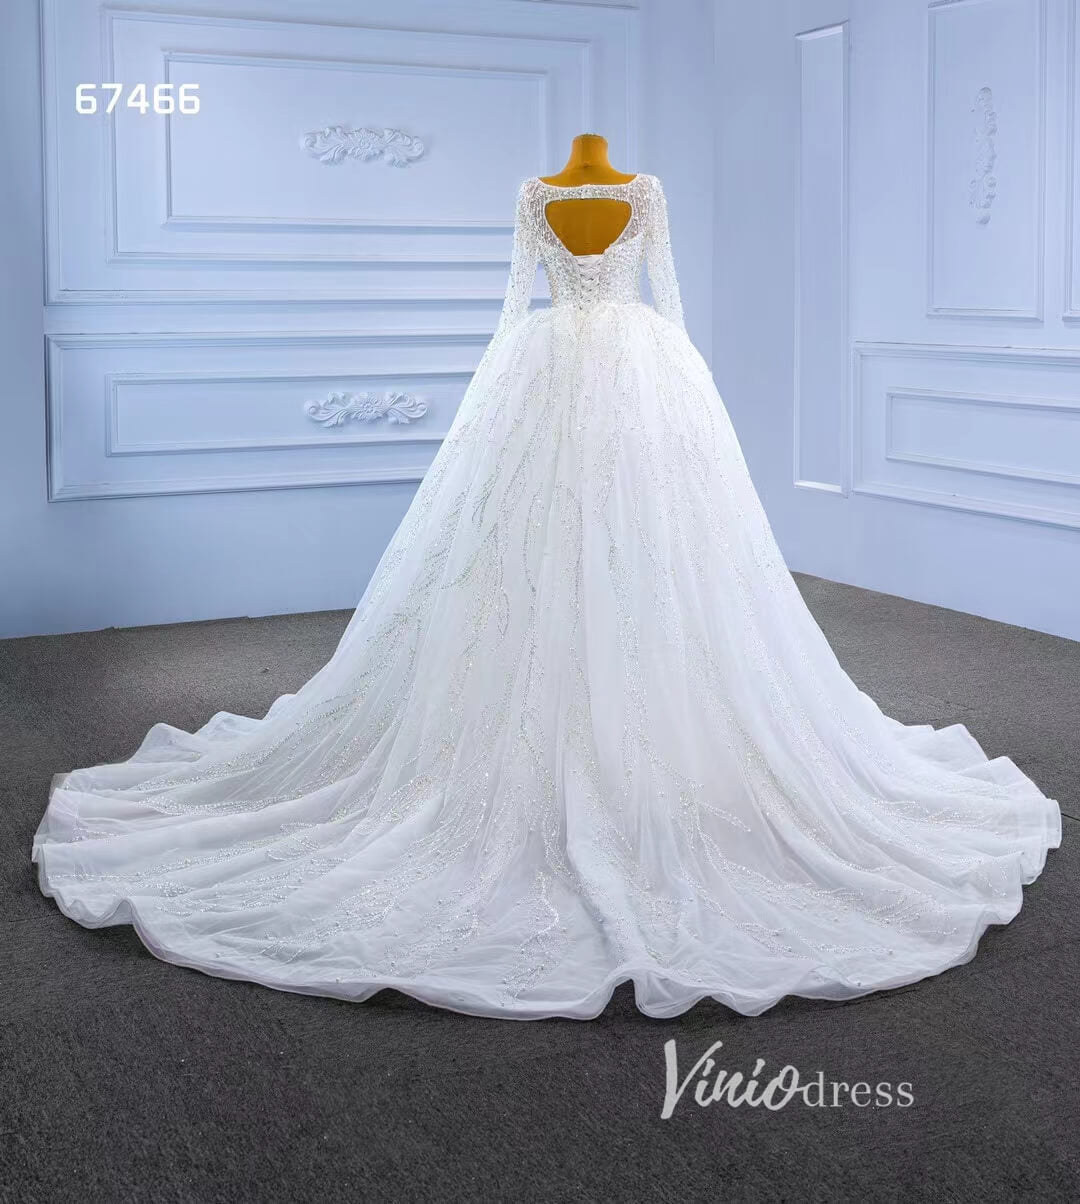 Long Sleeve Modern Pearl Wedding Dresses with Detachable Overskirt 67466-wedding dresses-Viniodress-Viniodress